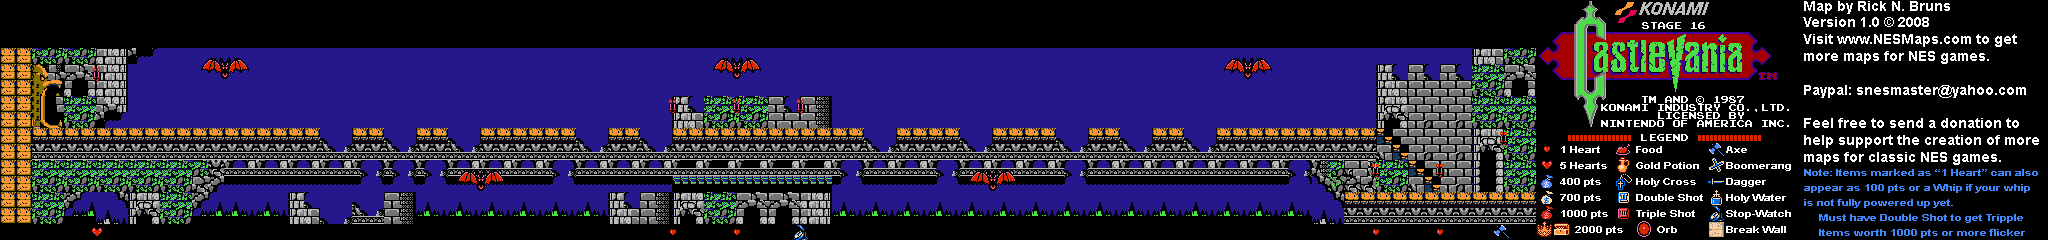 Castlevania - Stage 16 Nintendo NES Map